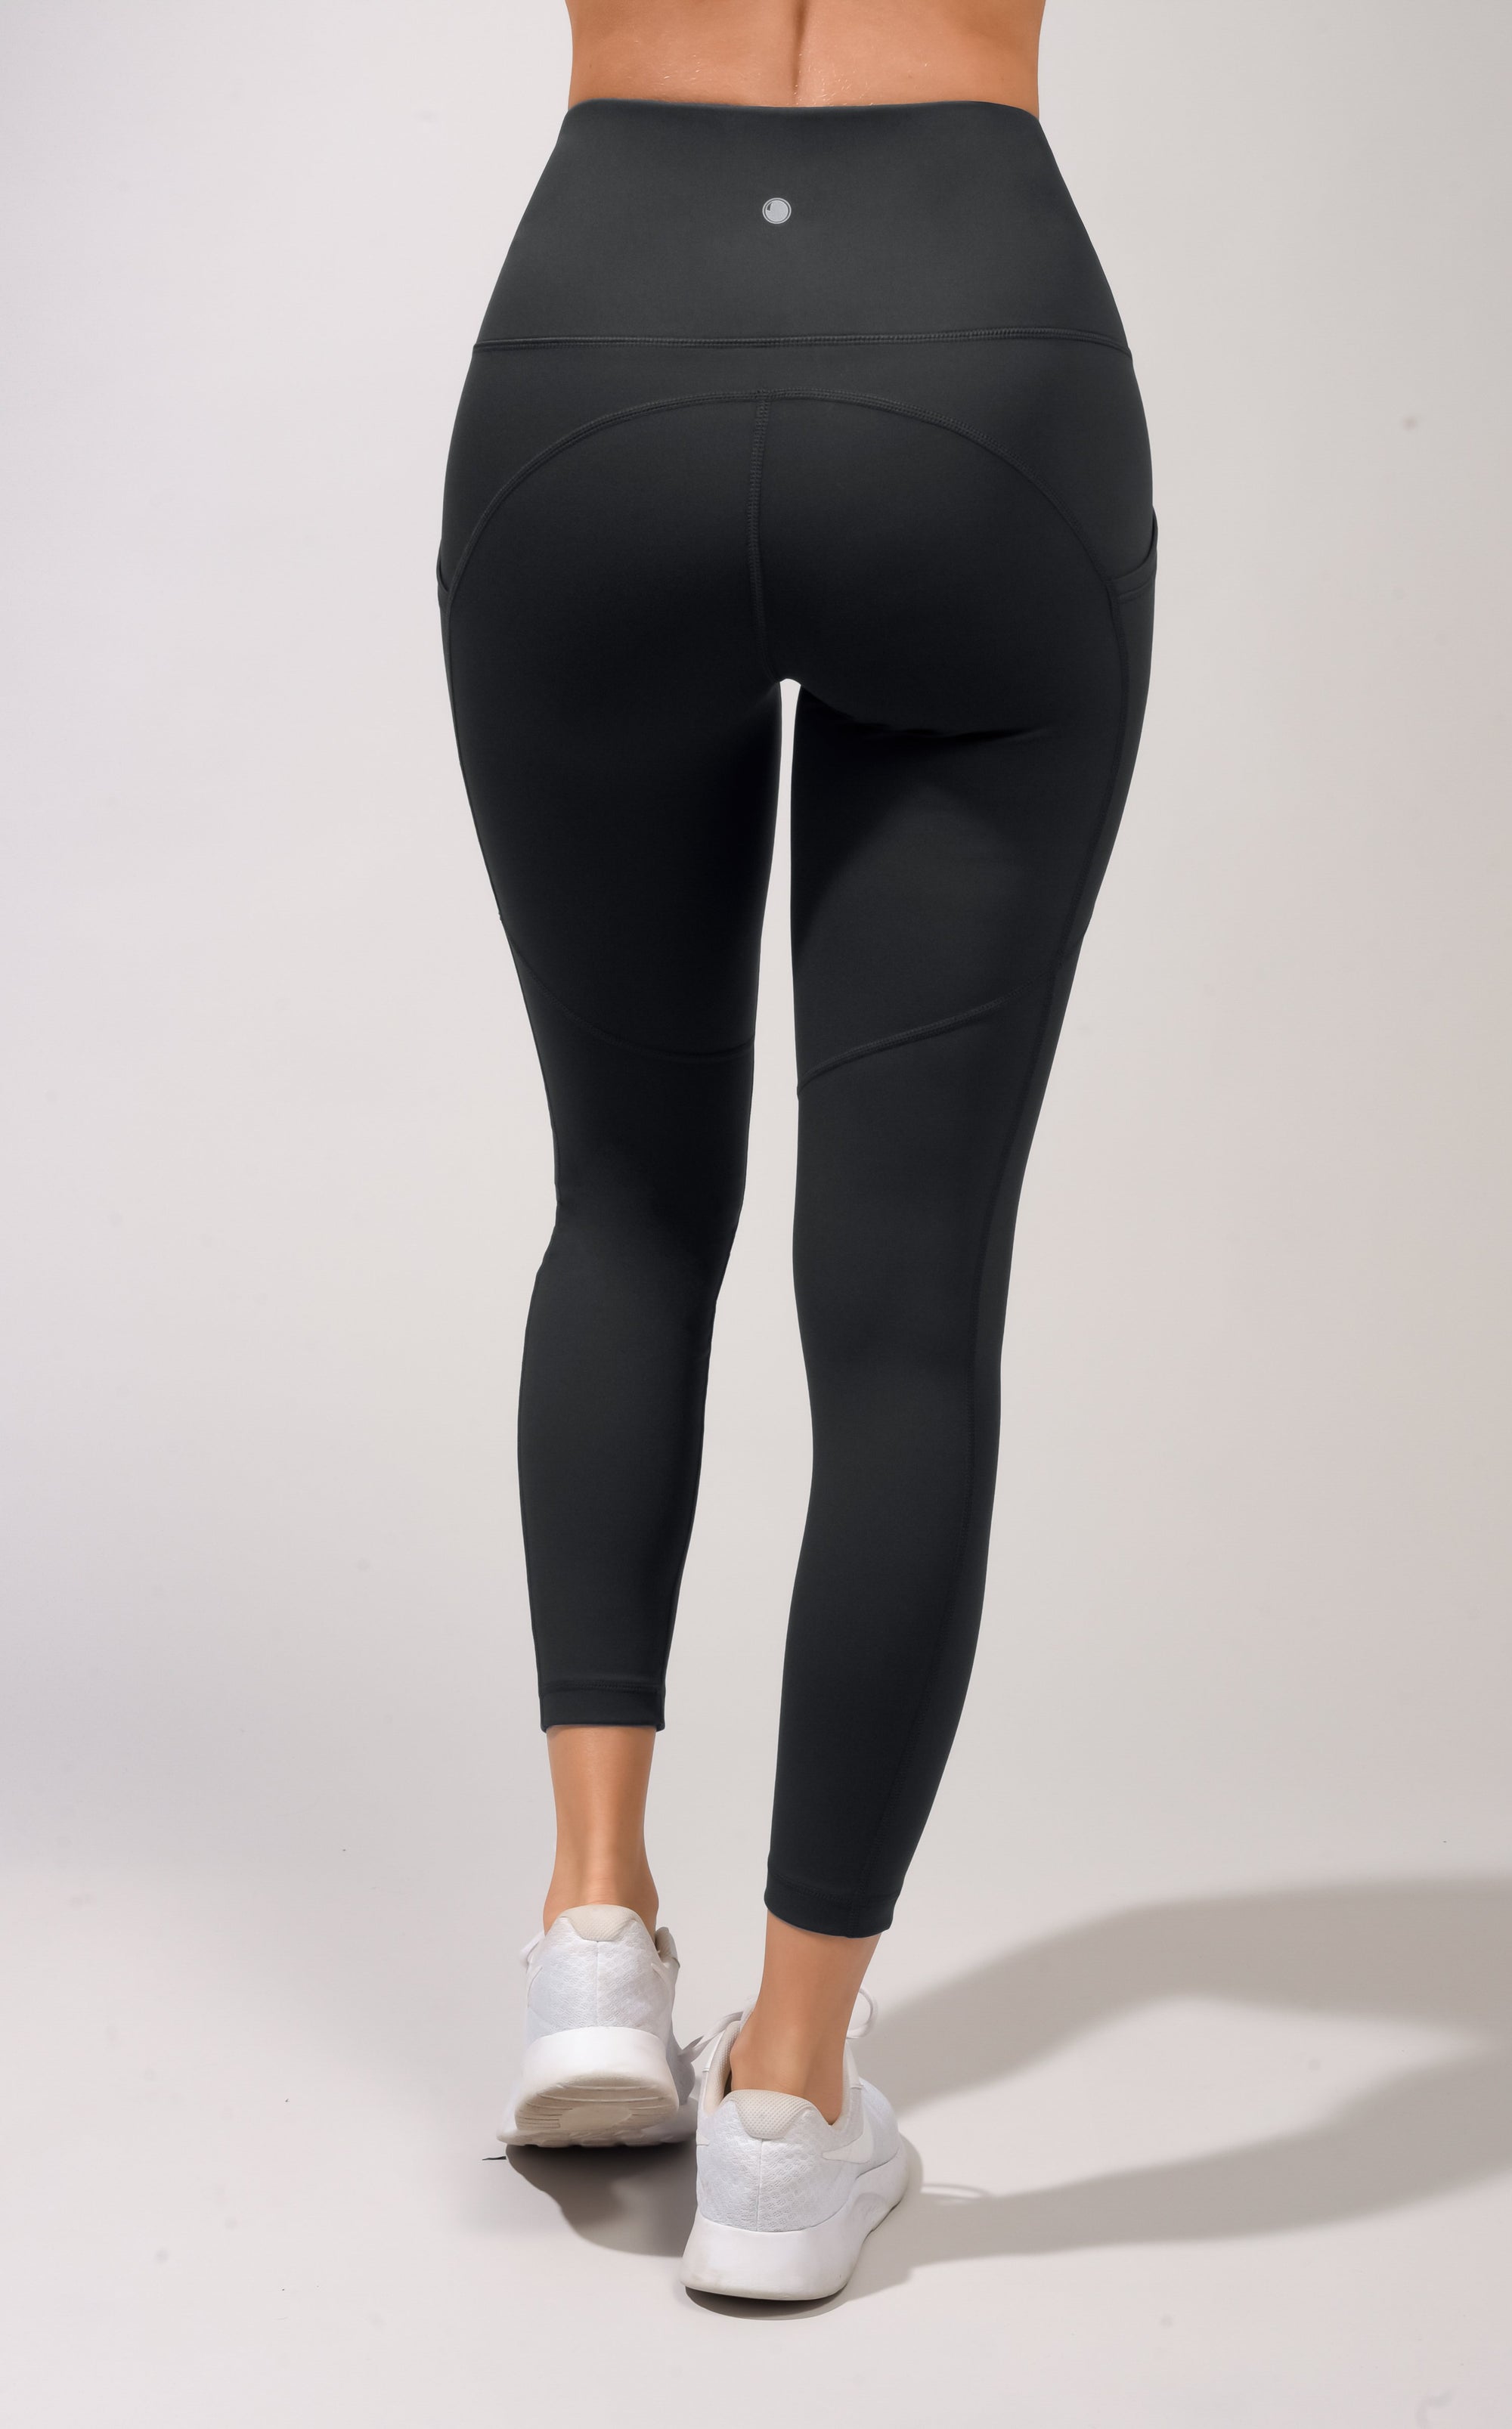 Yogalicious Black Yoga Pants Size M - 68% off